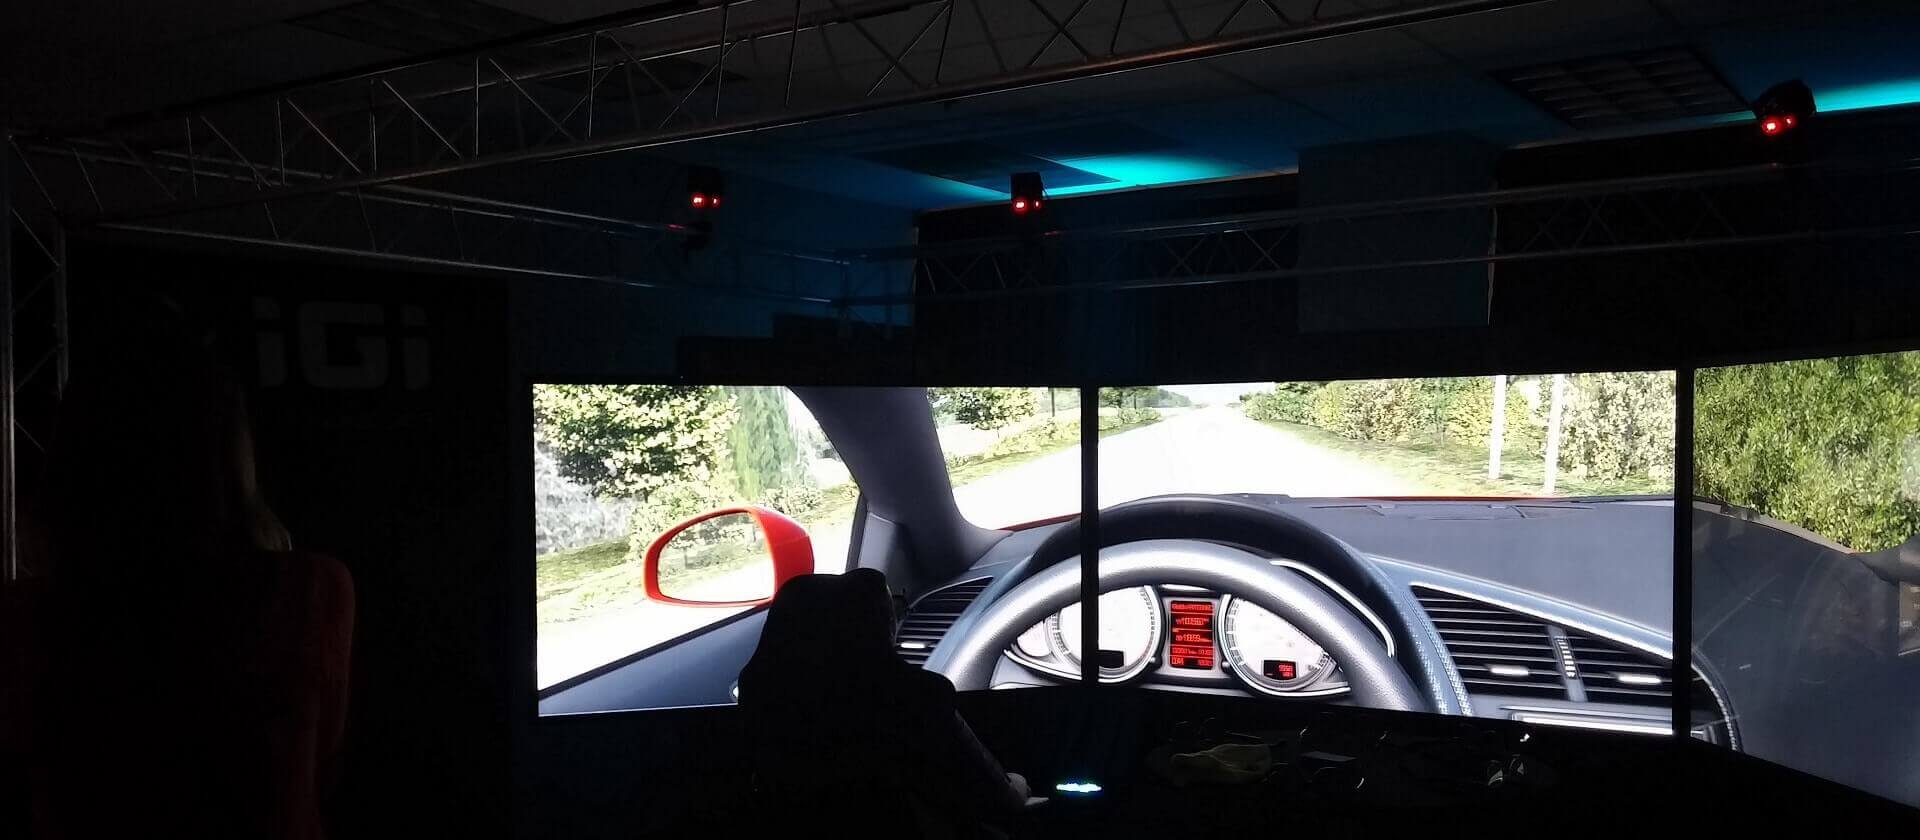 IGI driving simulator automotive AV virtual reality